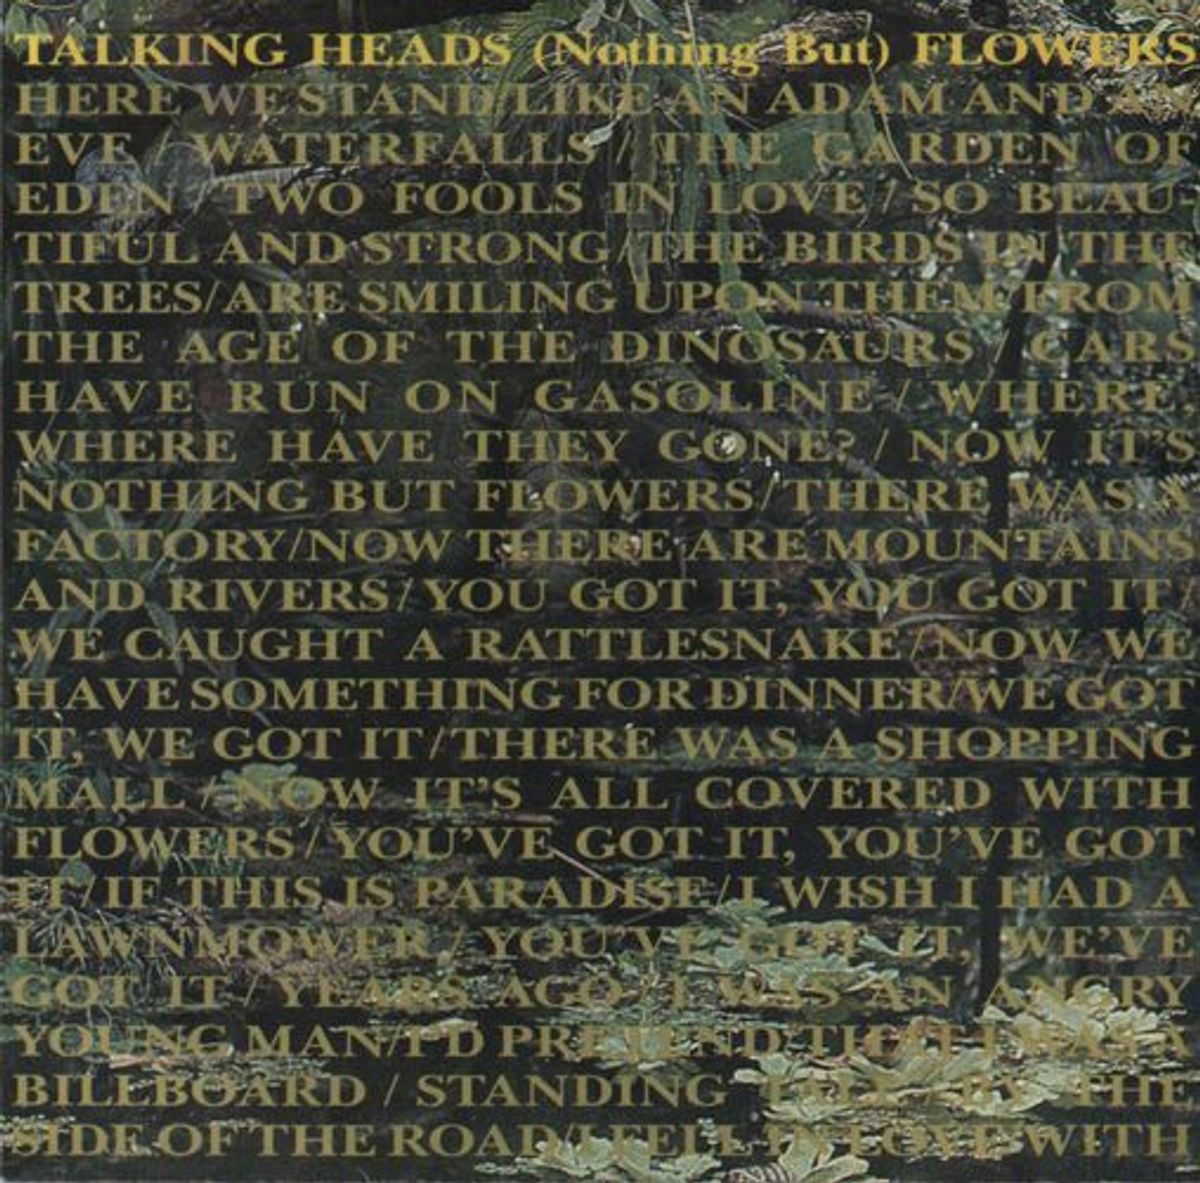 #MarrGuitarKing - Talking Heads - Nothing But Flowers (1988)